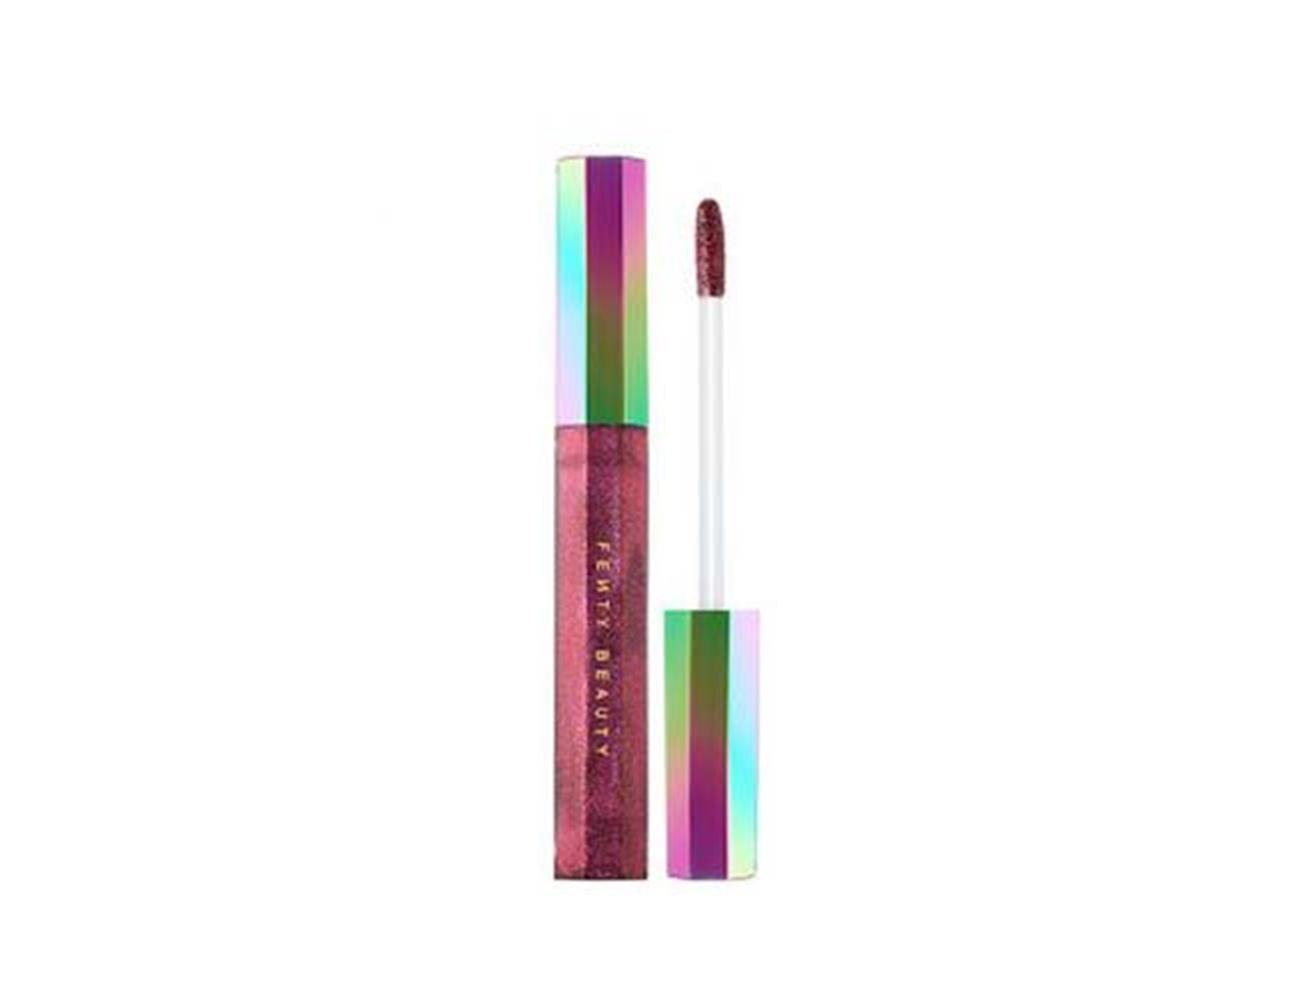 Fenty Beauty by Rihanna Cosmic Gloss Lip Glitter in Astro-Naughty (Limited Edition)